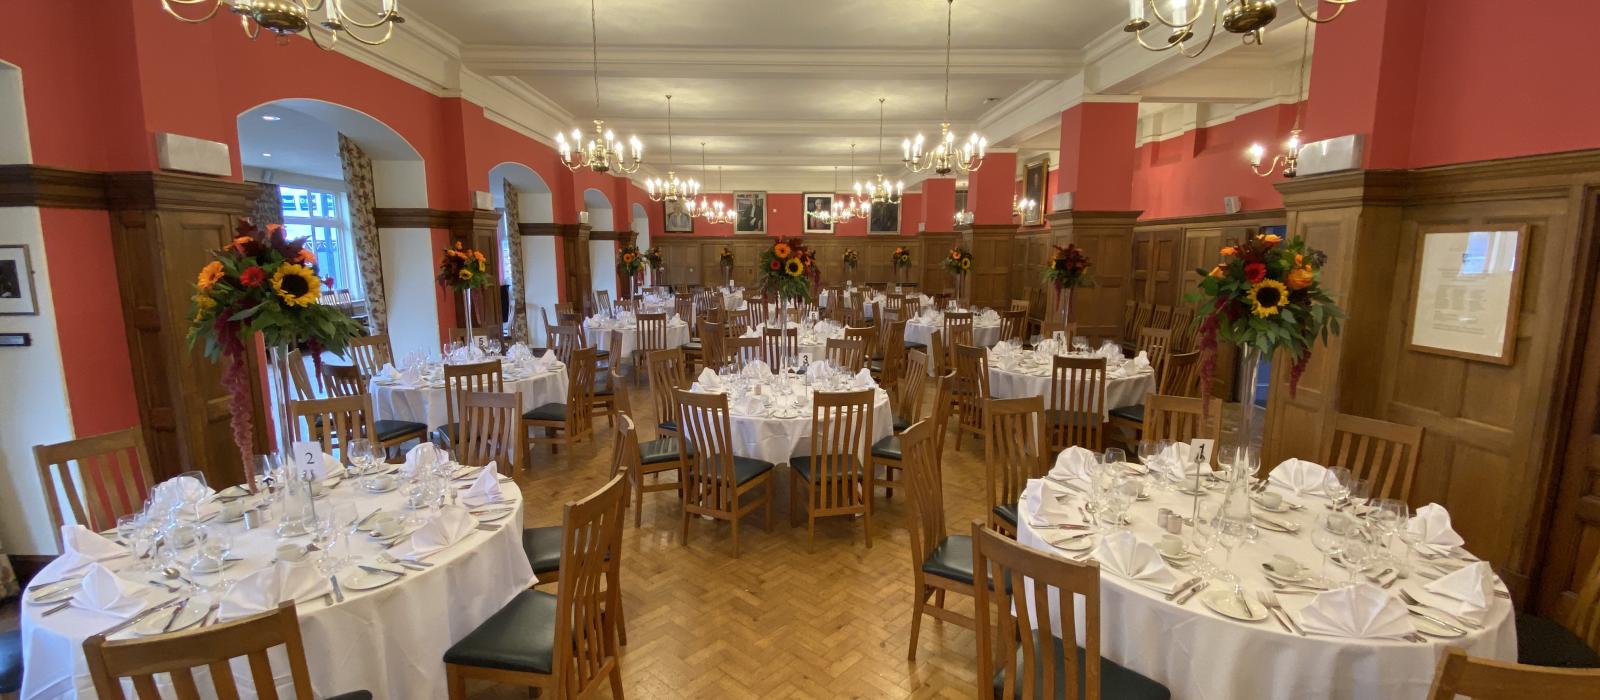 Dining Hall, St Hilda's College